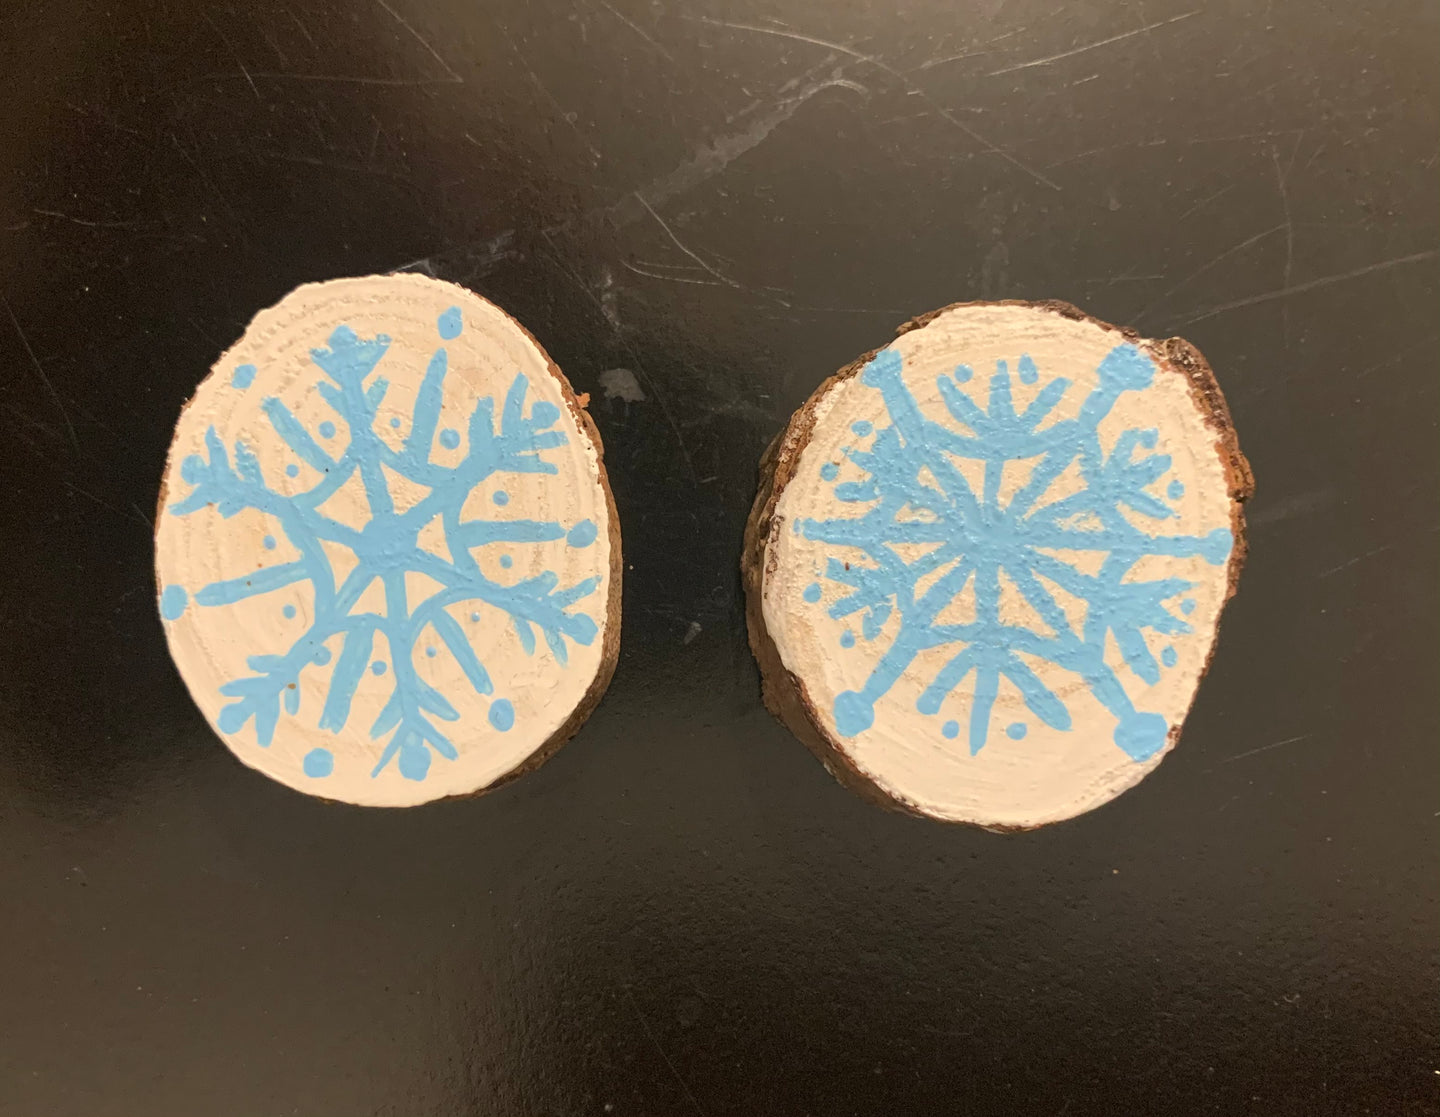 Snowflake magnets